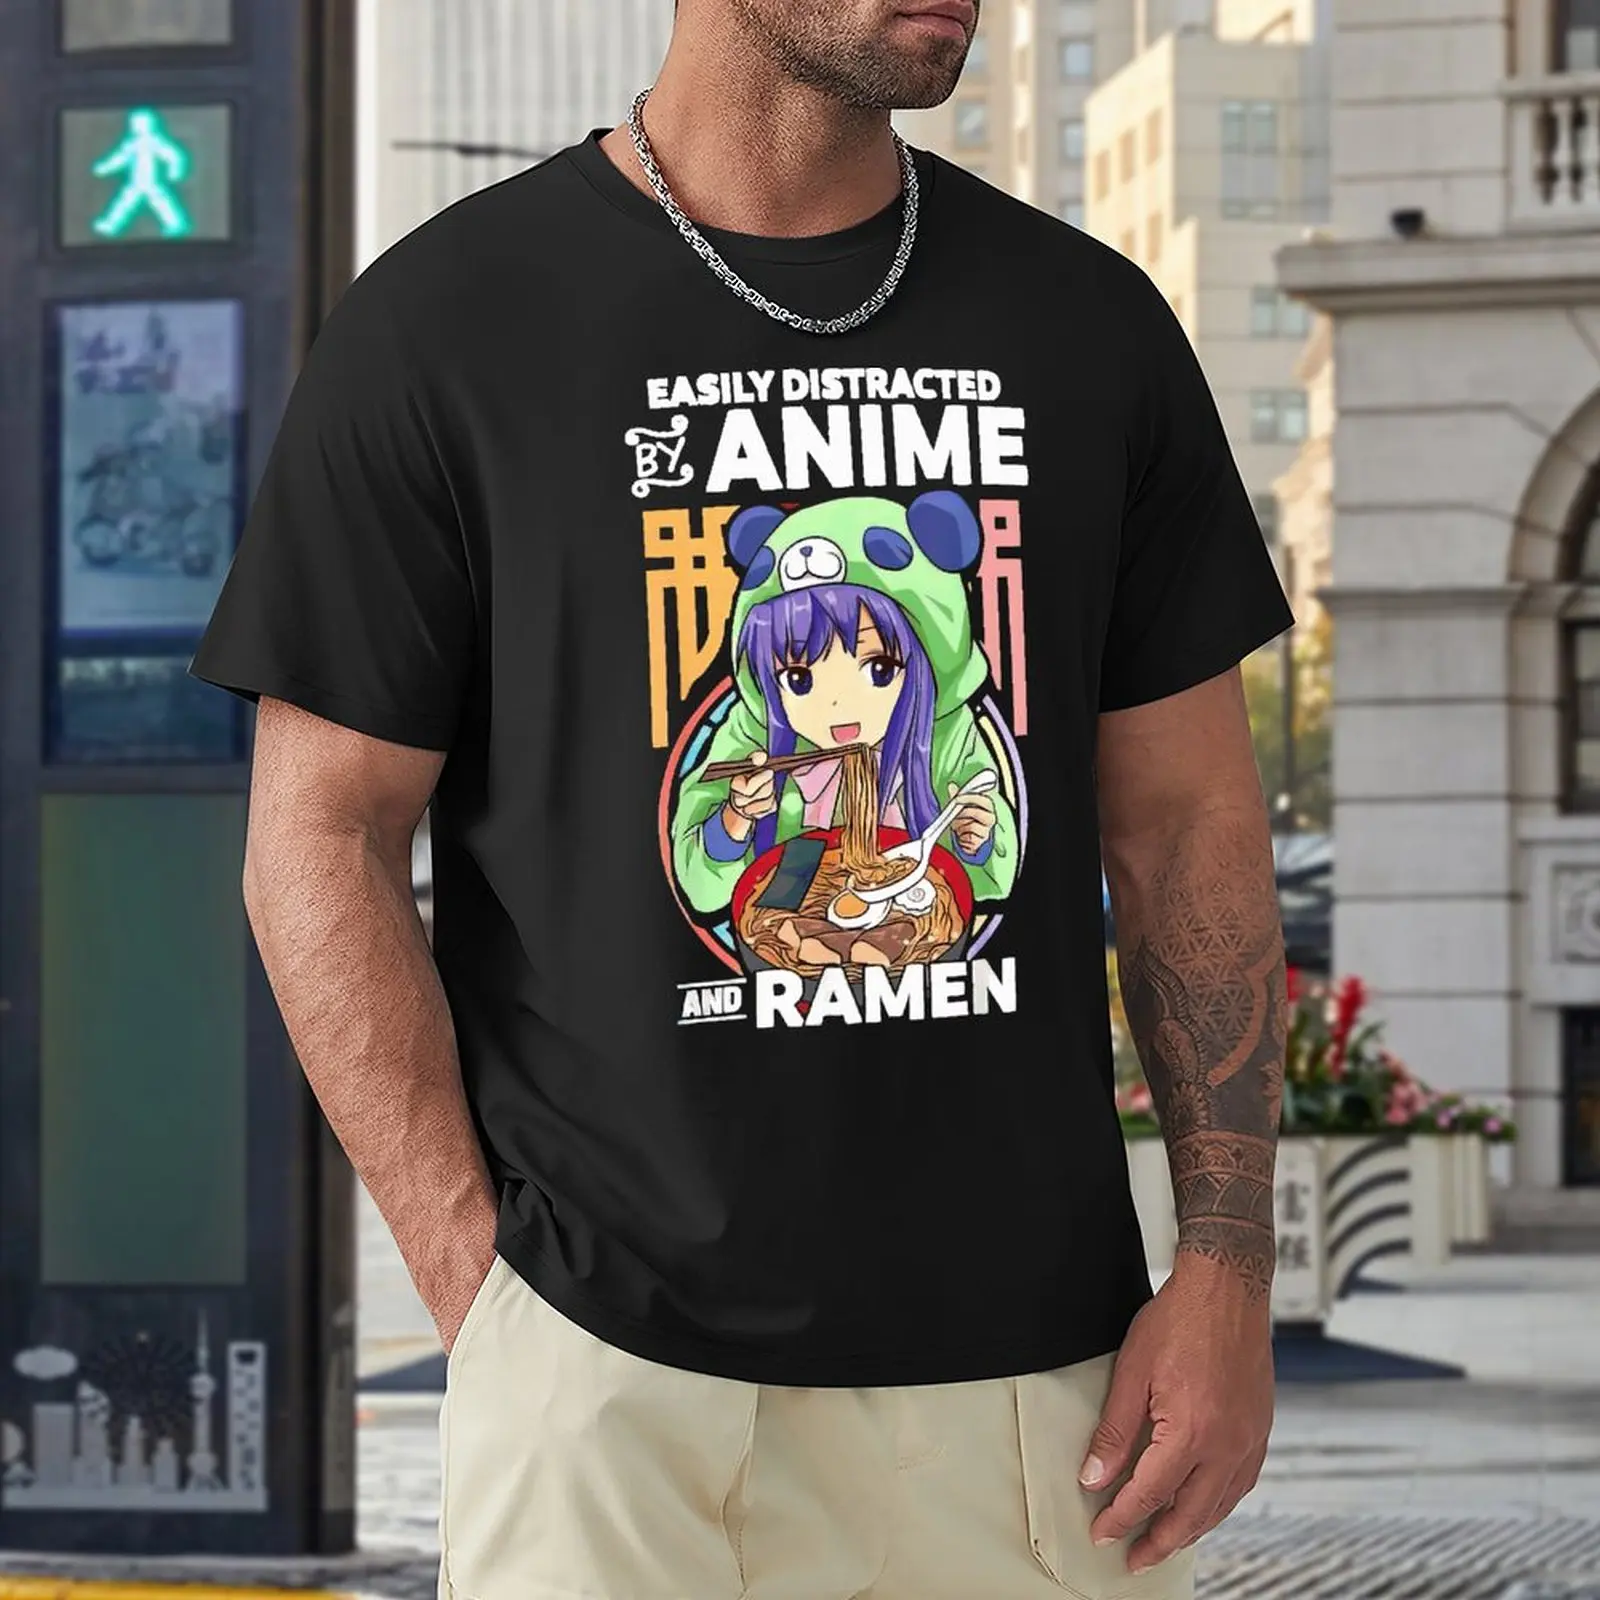 

Easily Distracted By Anime And Ramen Bowl Panda Teen Girls T Shirts Men Shirt Fashion Clothes Graphics Sweatshirt 100% Cotton T